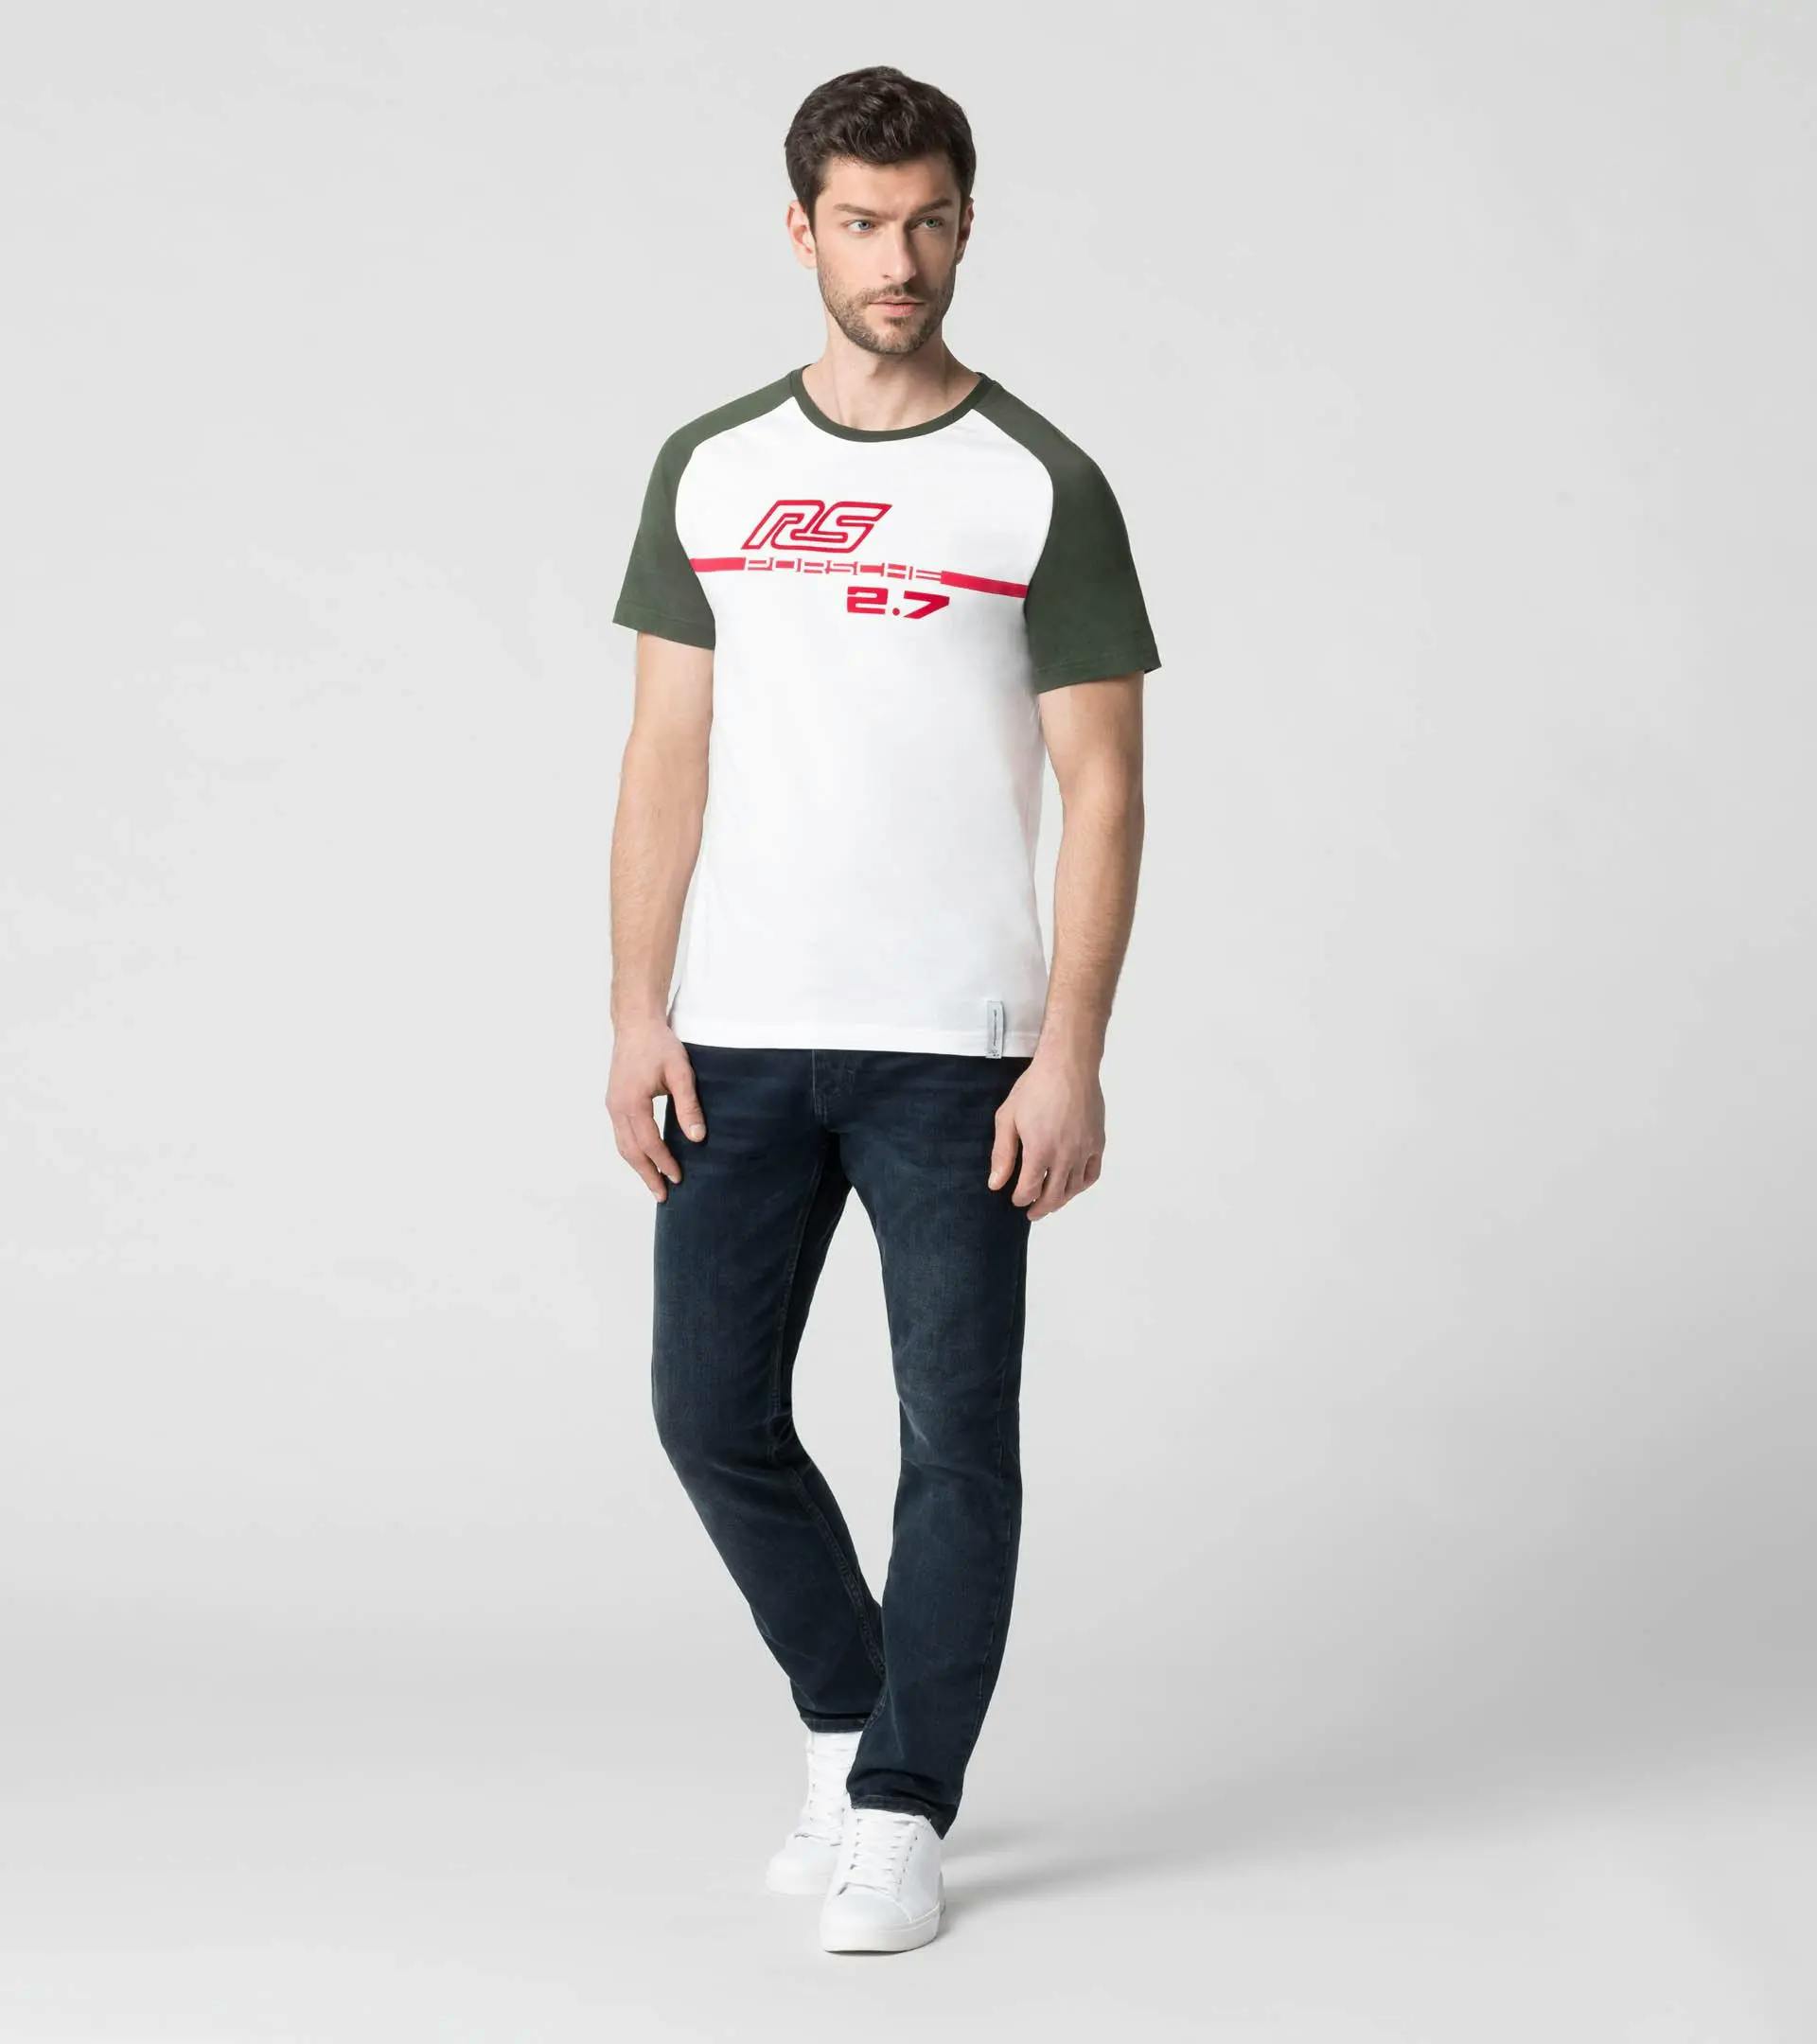 Men's T-shirt – RS 2.7 7